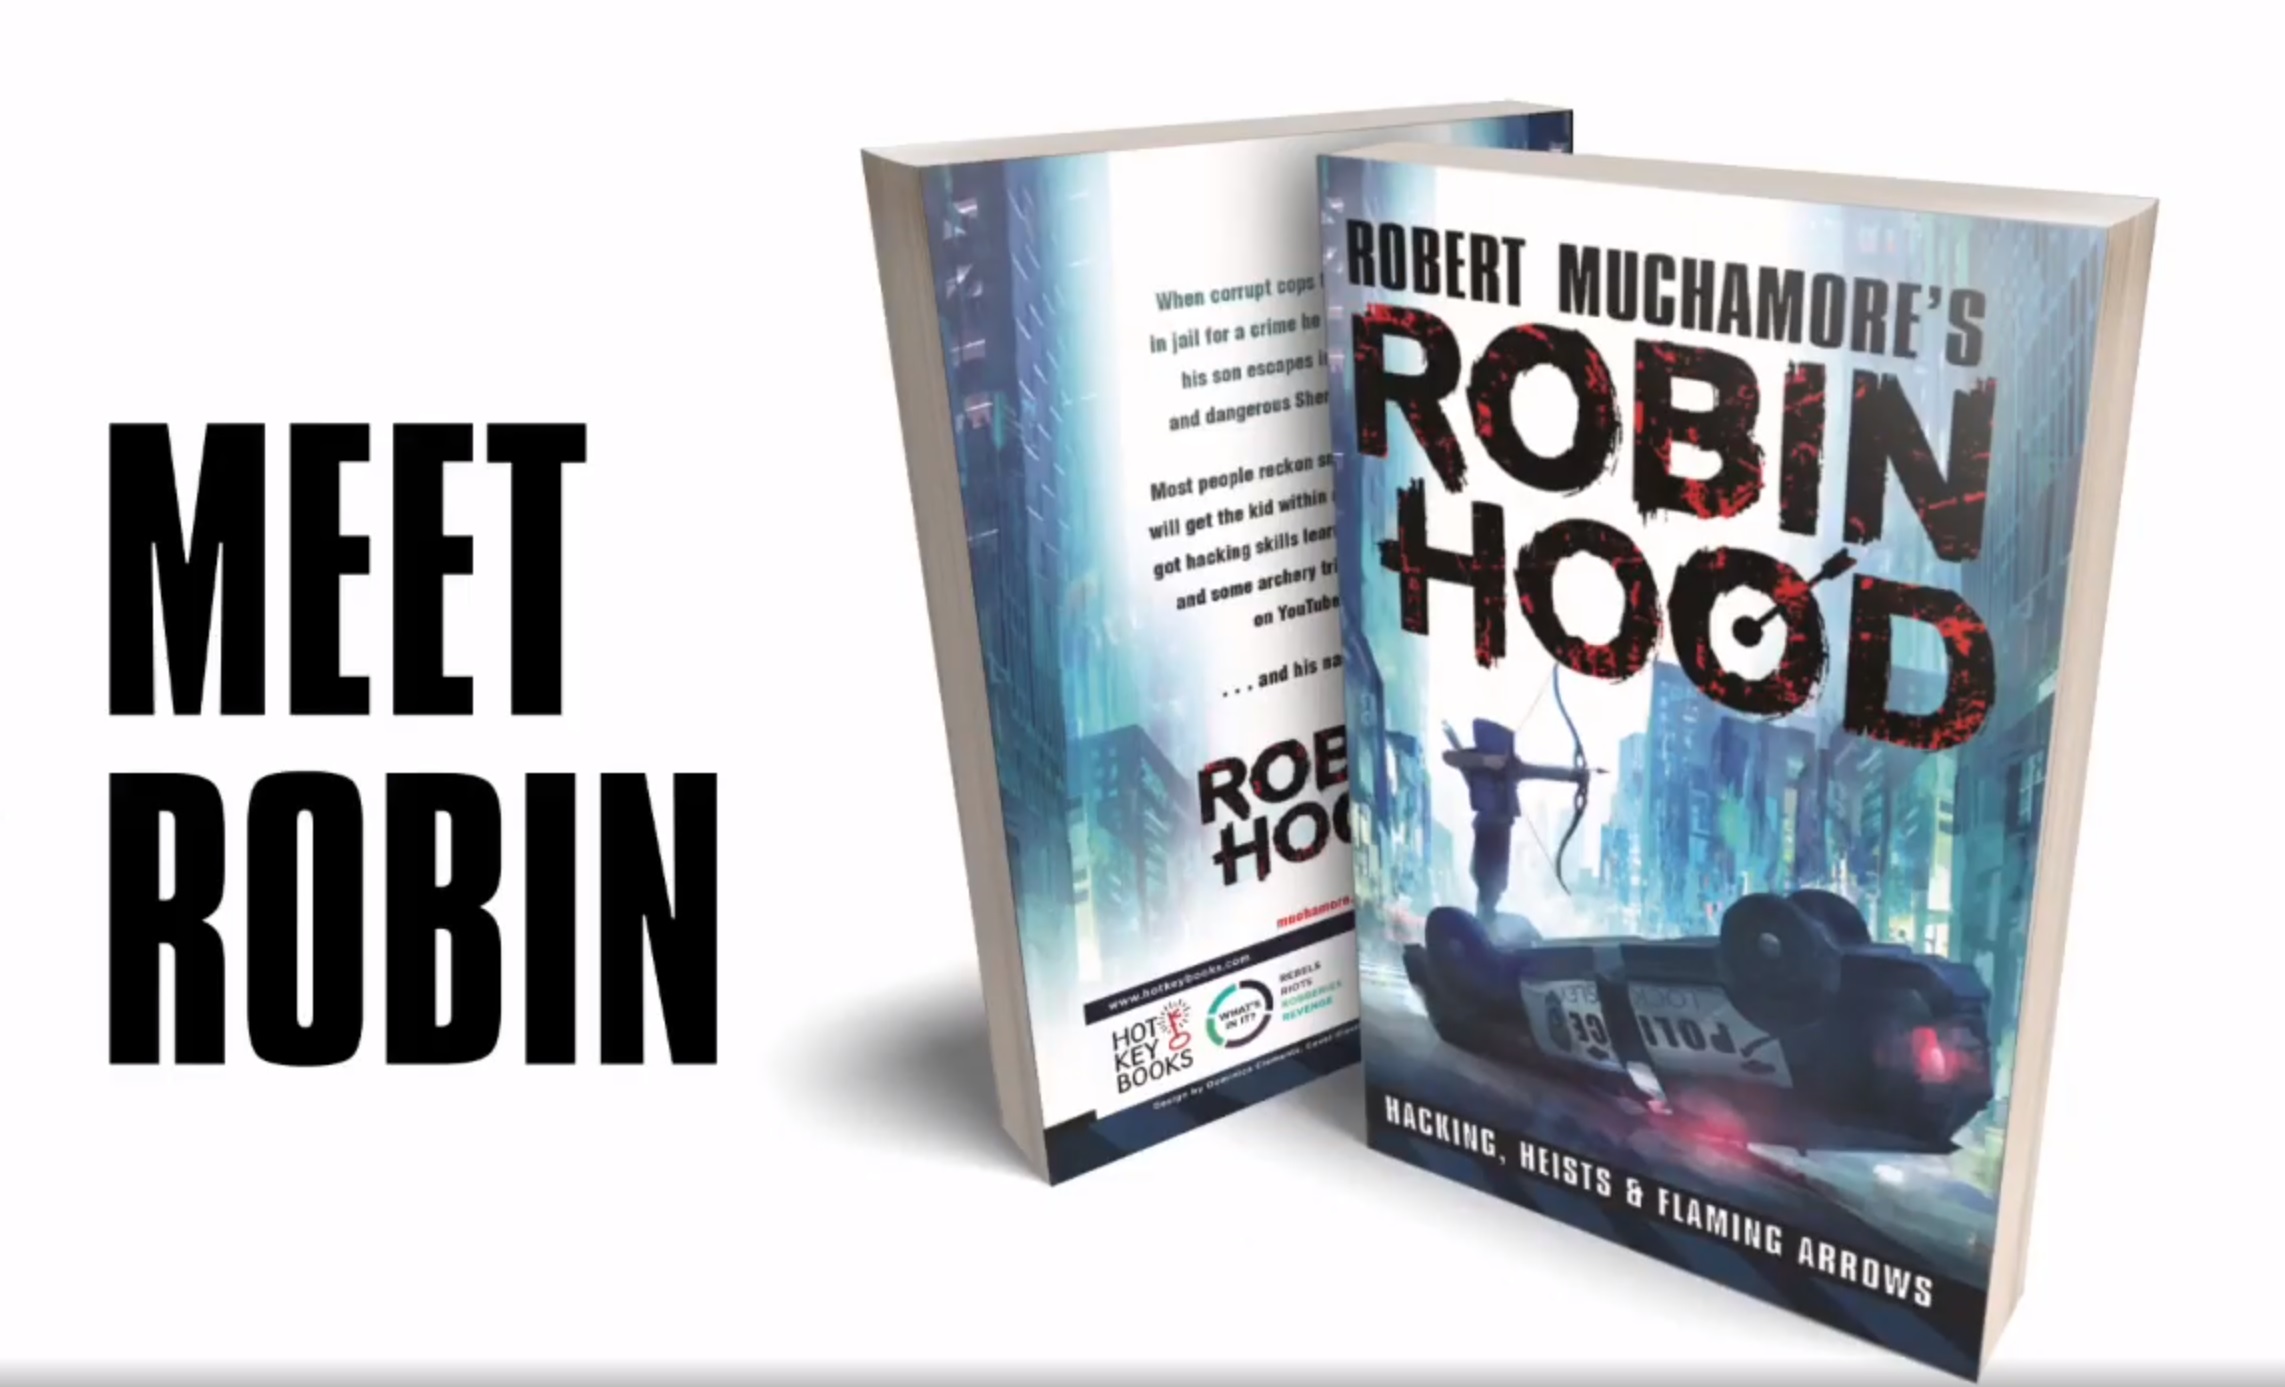 Robert Muchamore introduces his Robin Hood series